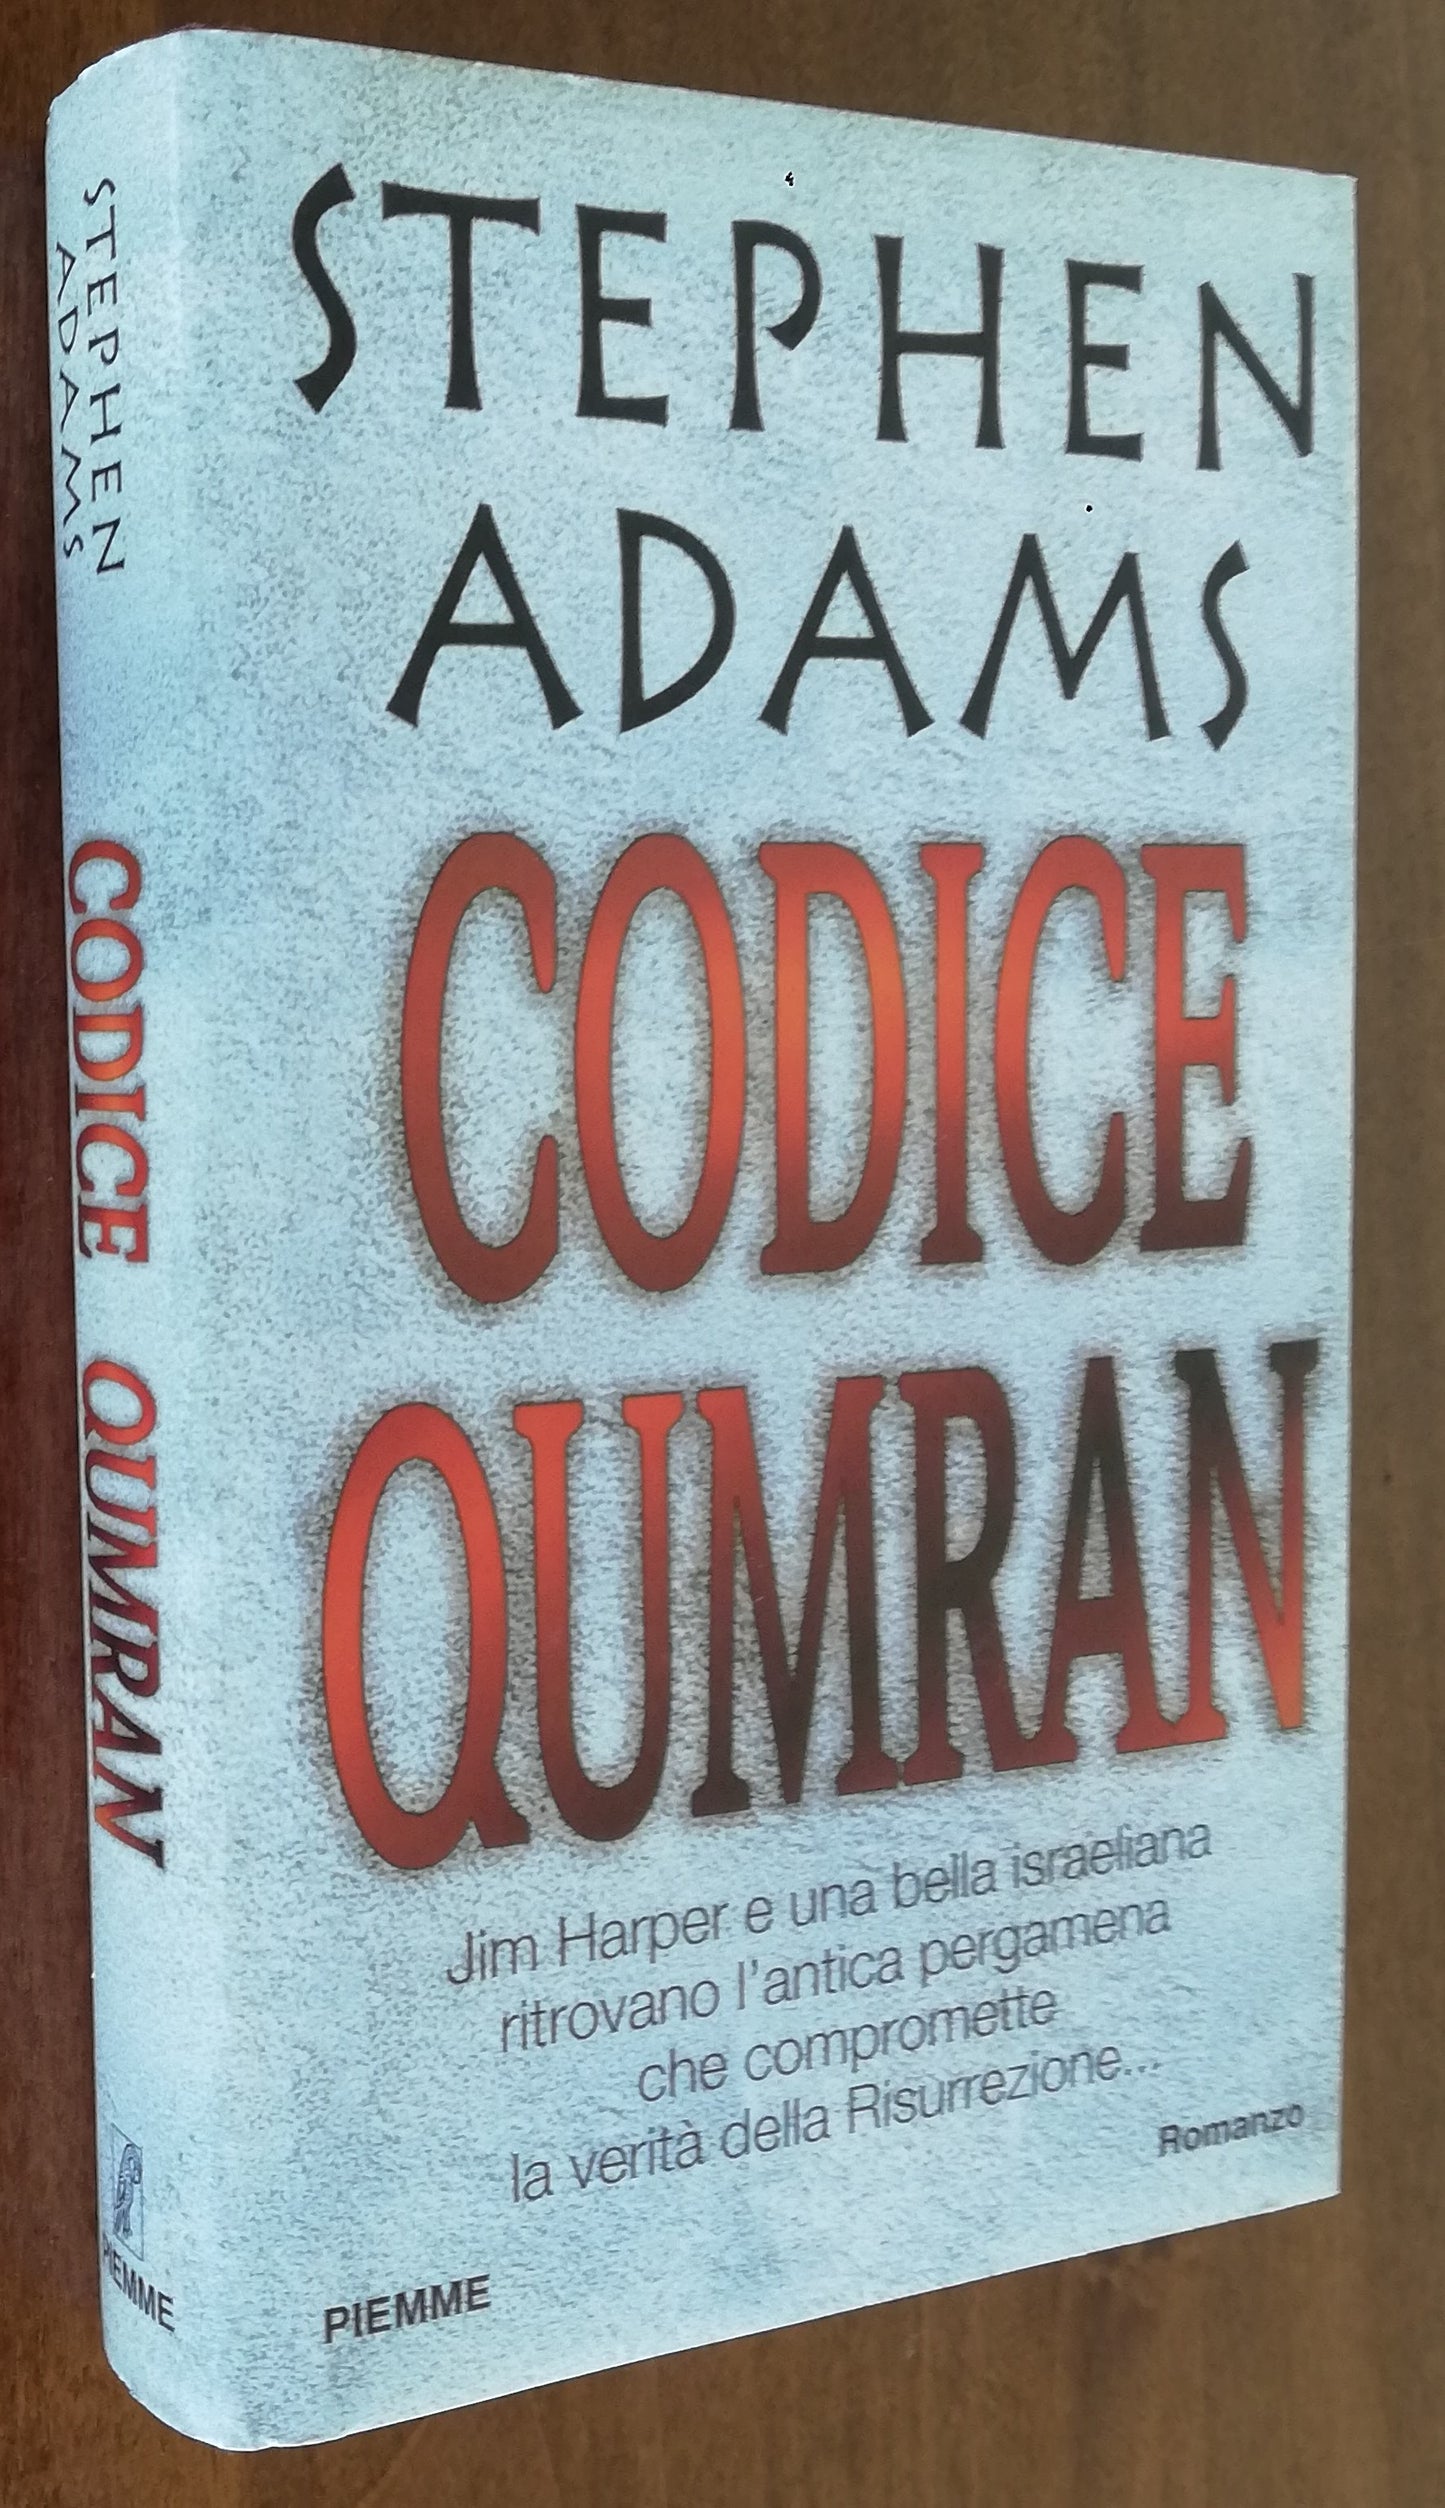 Codice Qumran - Piemme